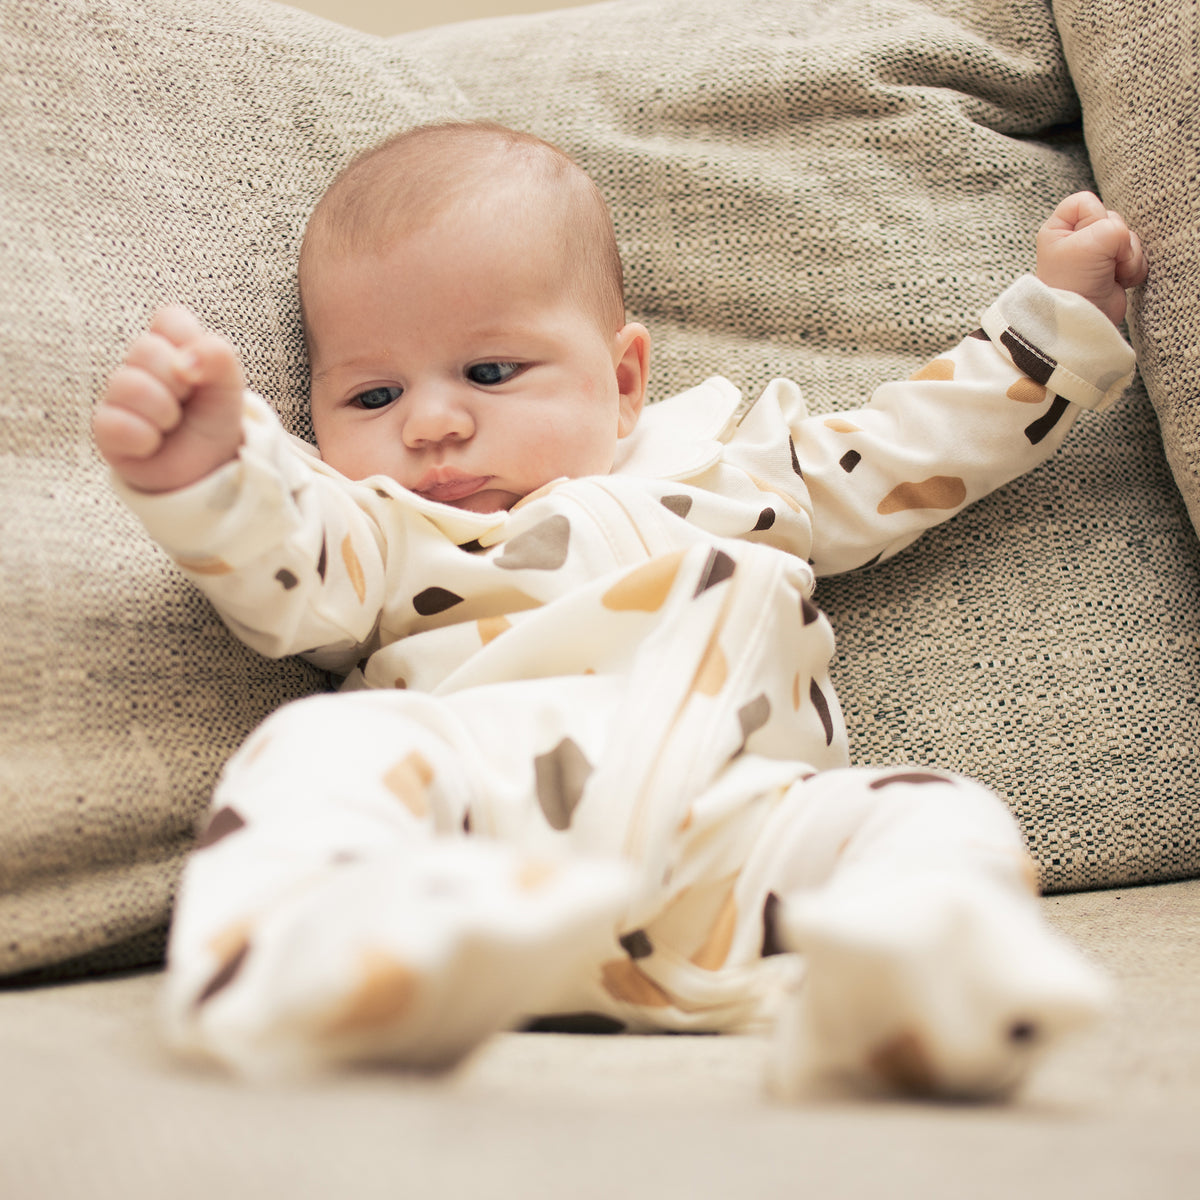 Pyjama bébé zippé en coton bio vanille imprimé rainbow Dim ZIPPY ®